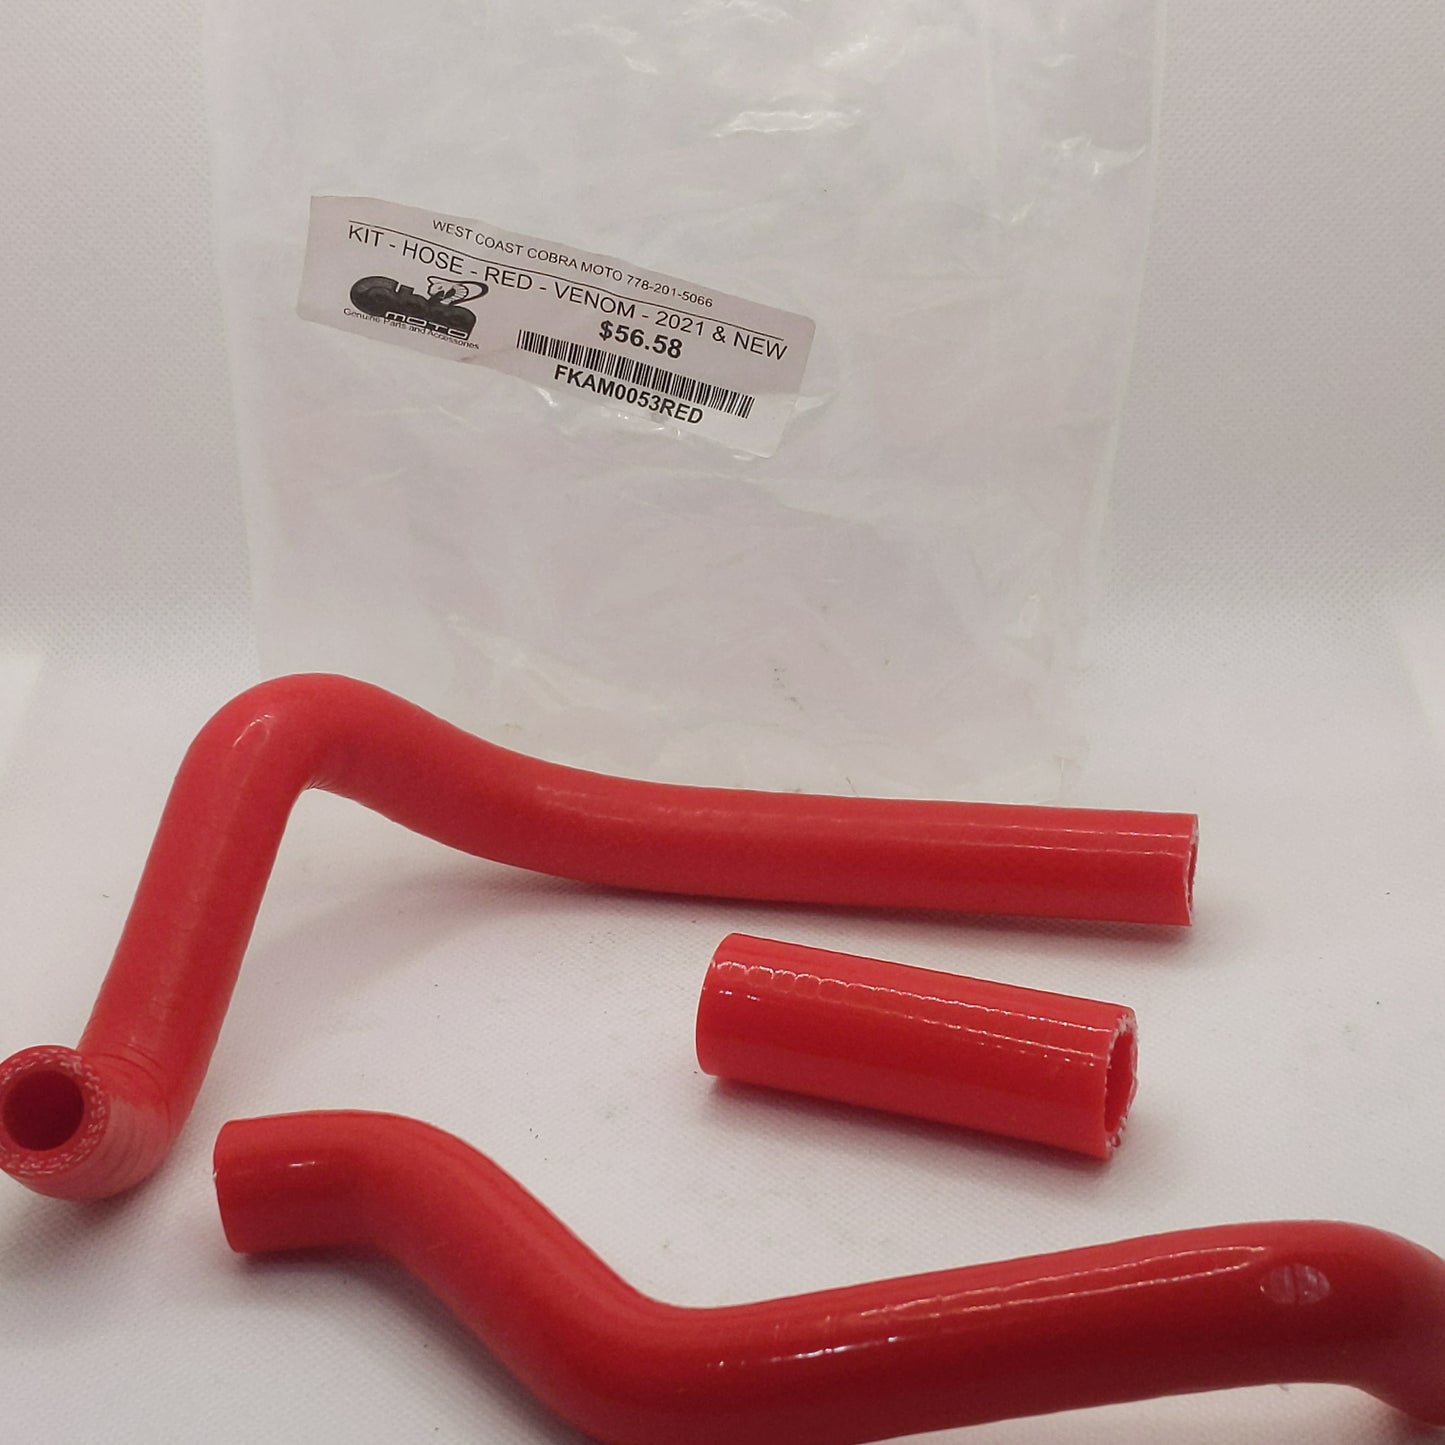 FKAM0053RED Venom hose kit 2021- red